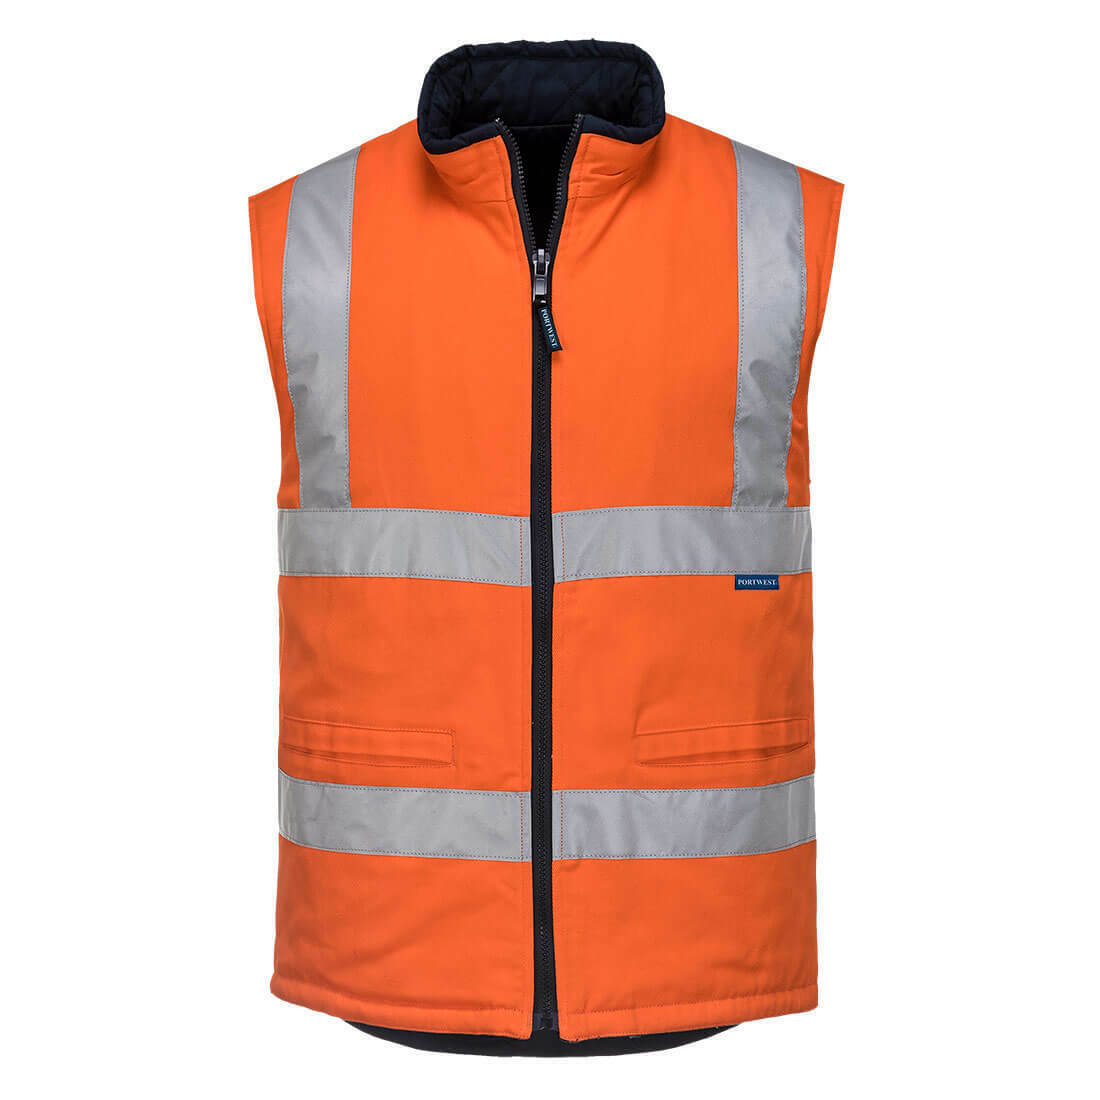 Portwest Men Hi-VisTex 100% Cotton Reversible Vest Reflective Safety Work MV278